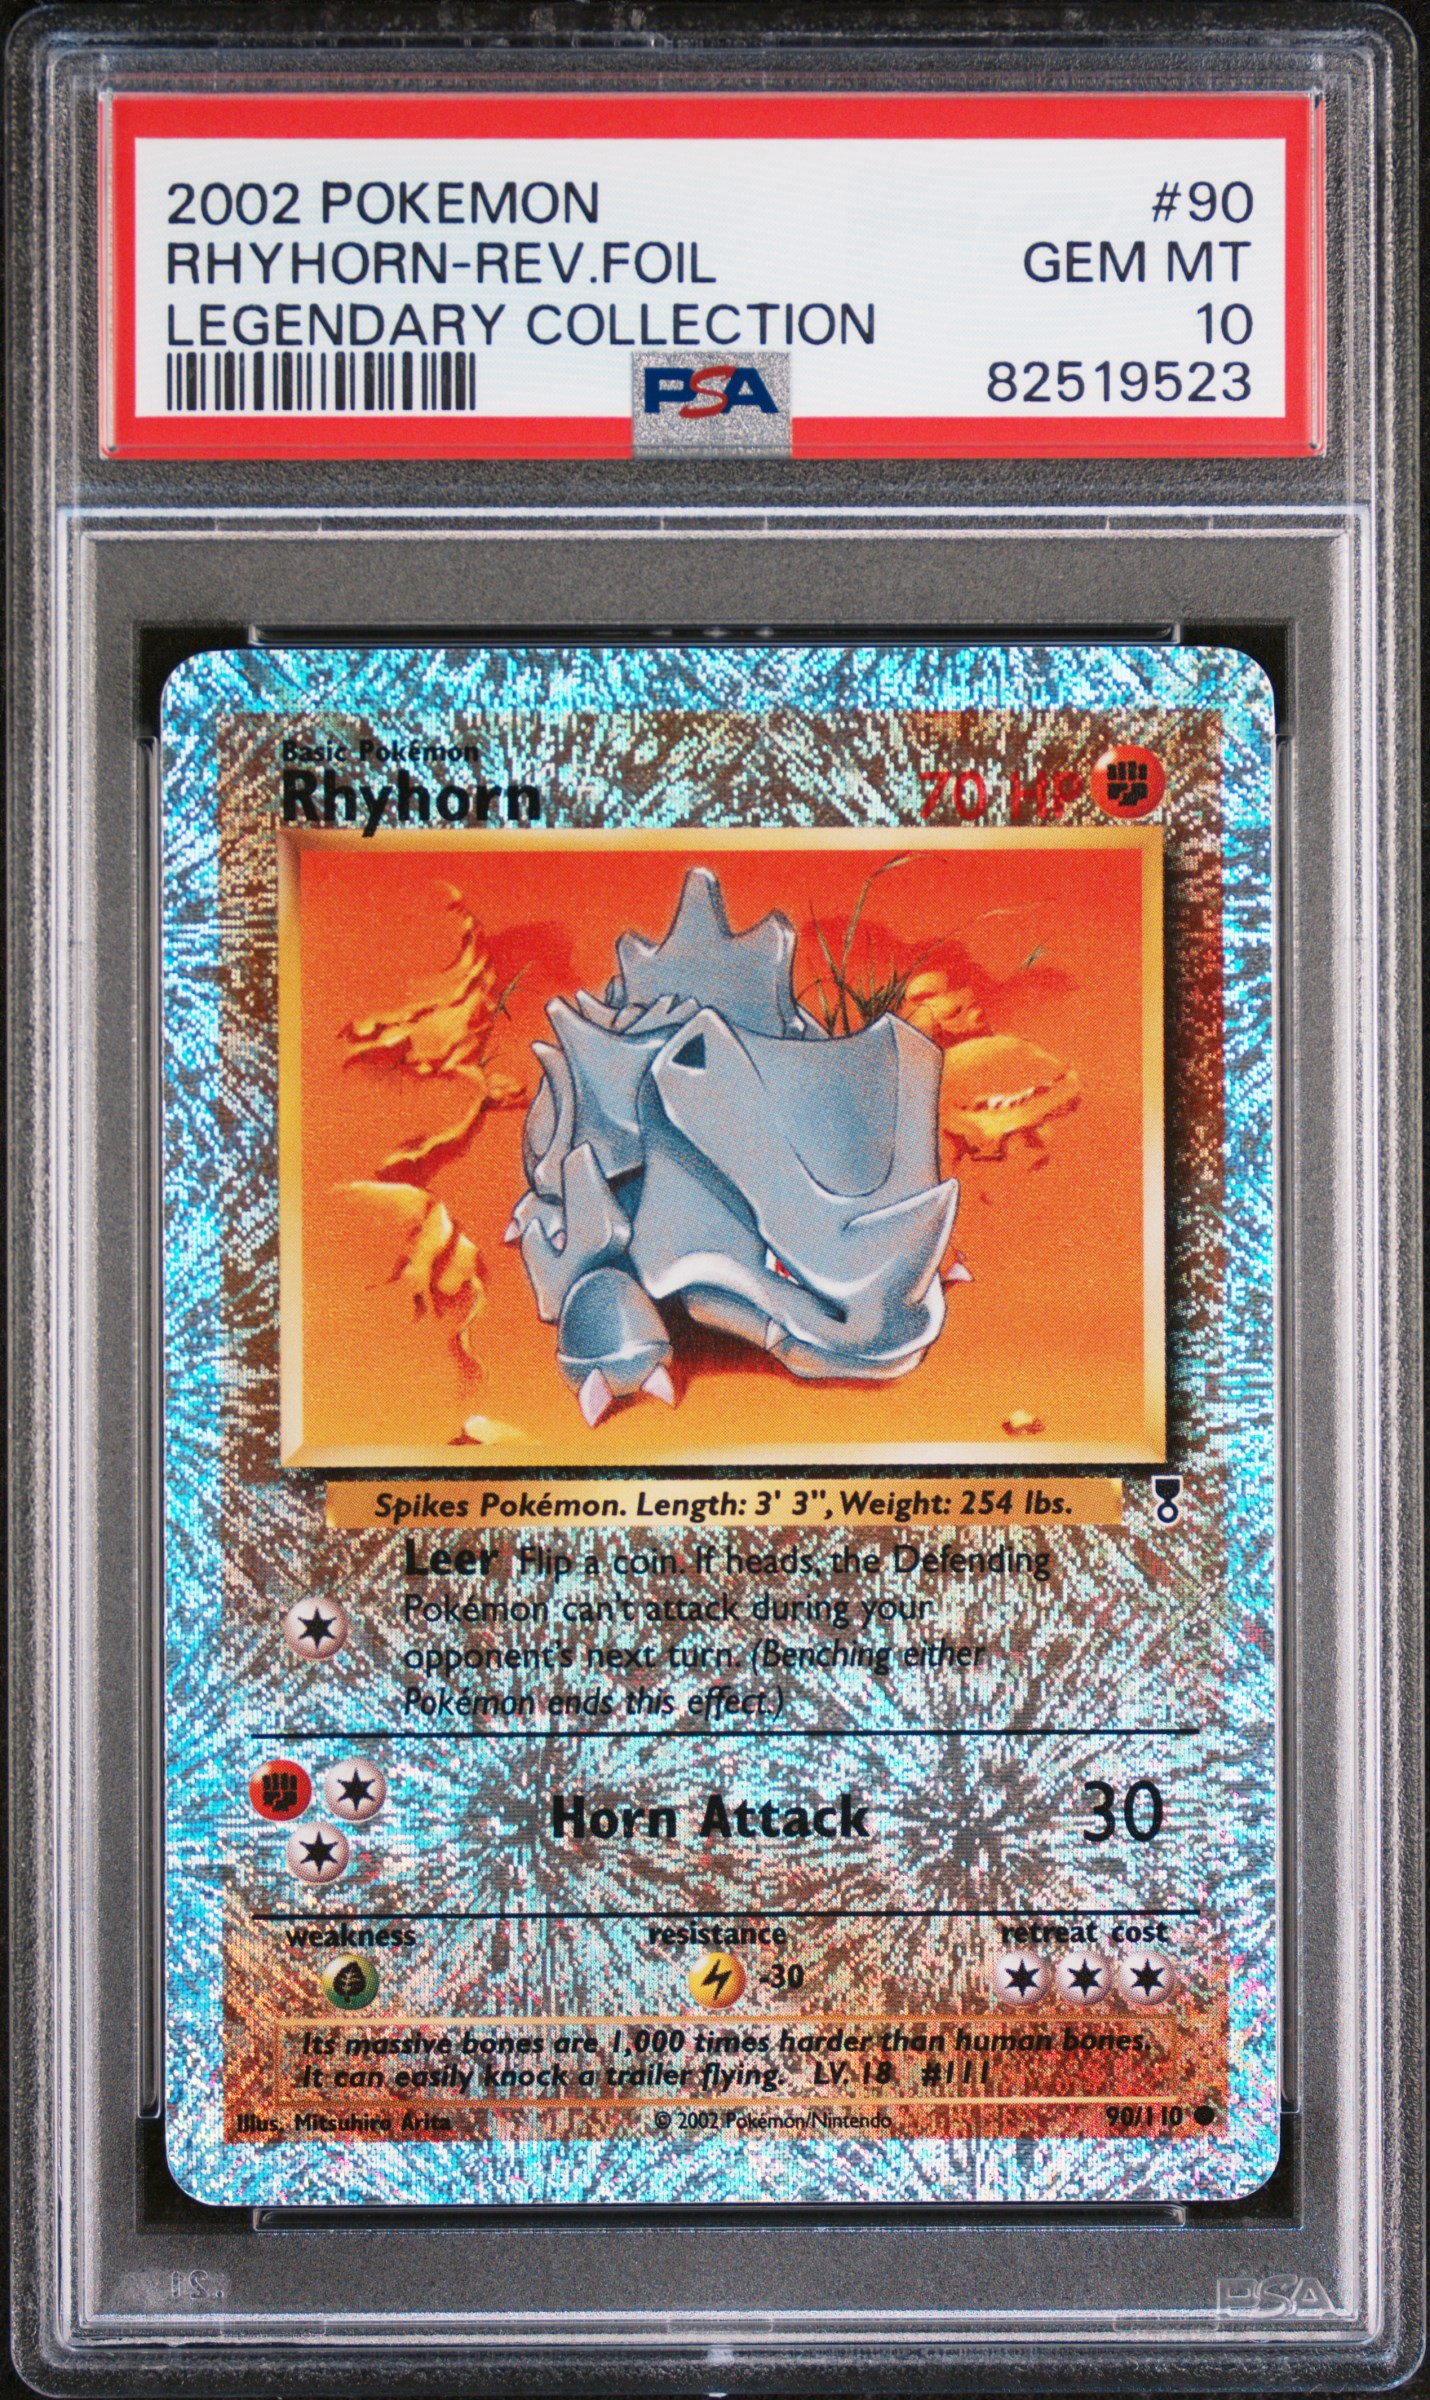 2002 Pokemon Legendary Collection 90 Rhyhorn-Reverse Foil – PSA GEM MT 10